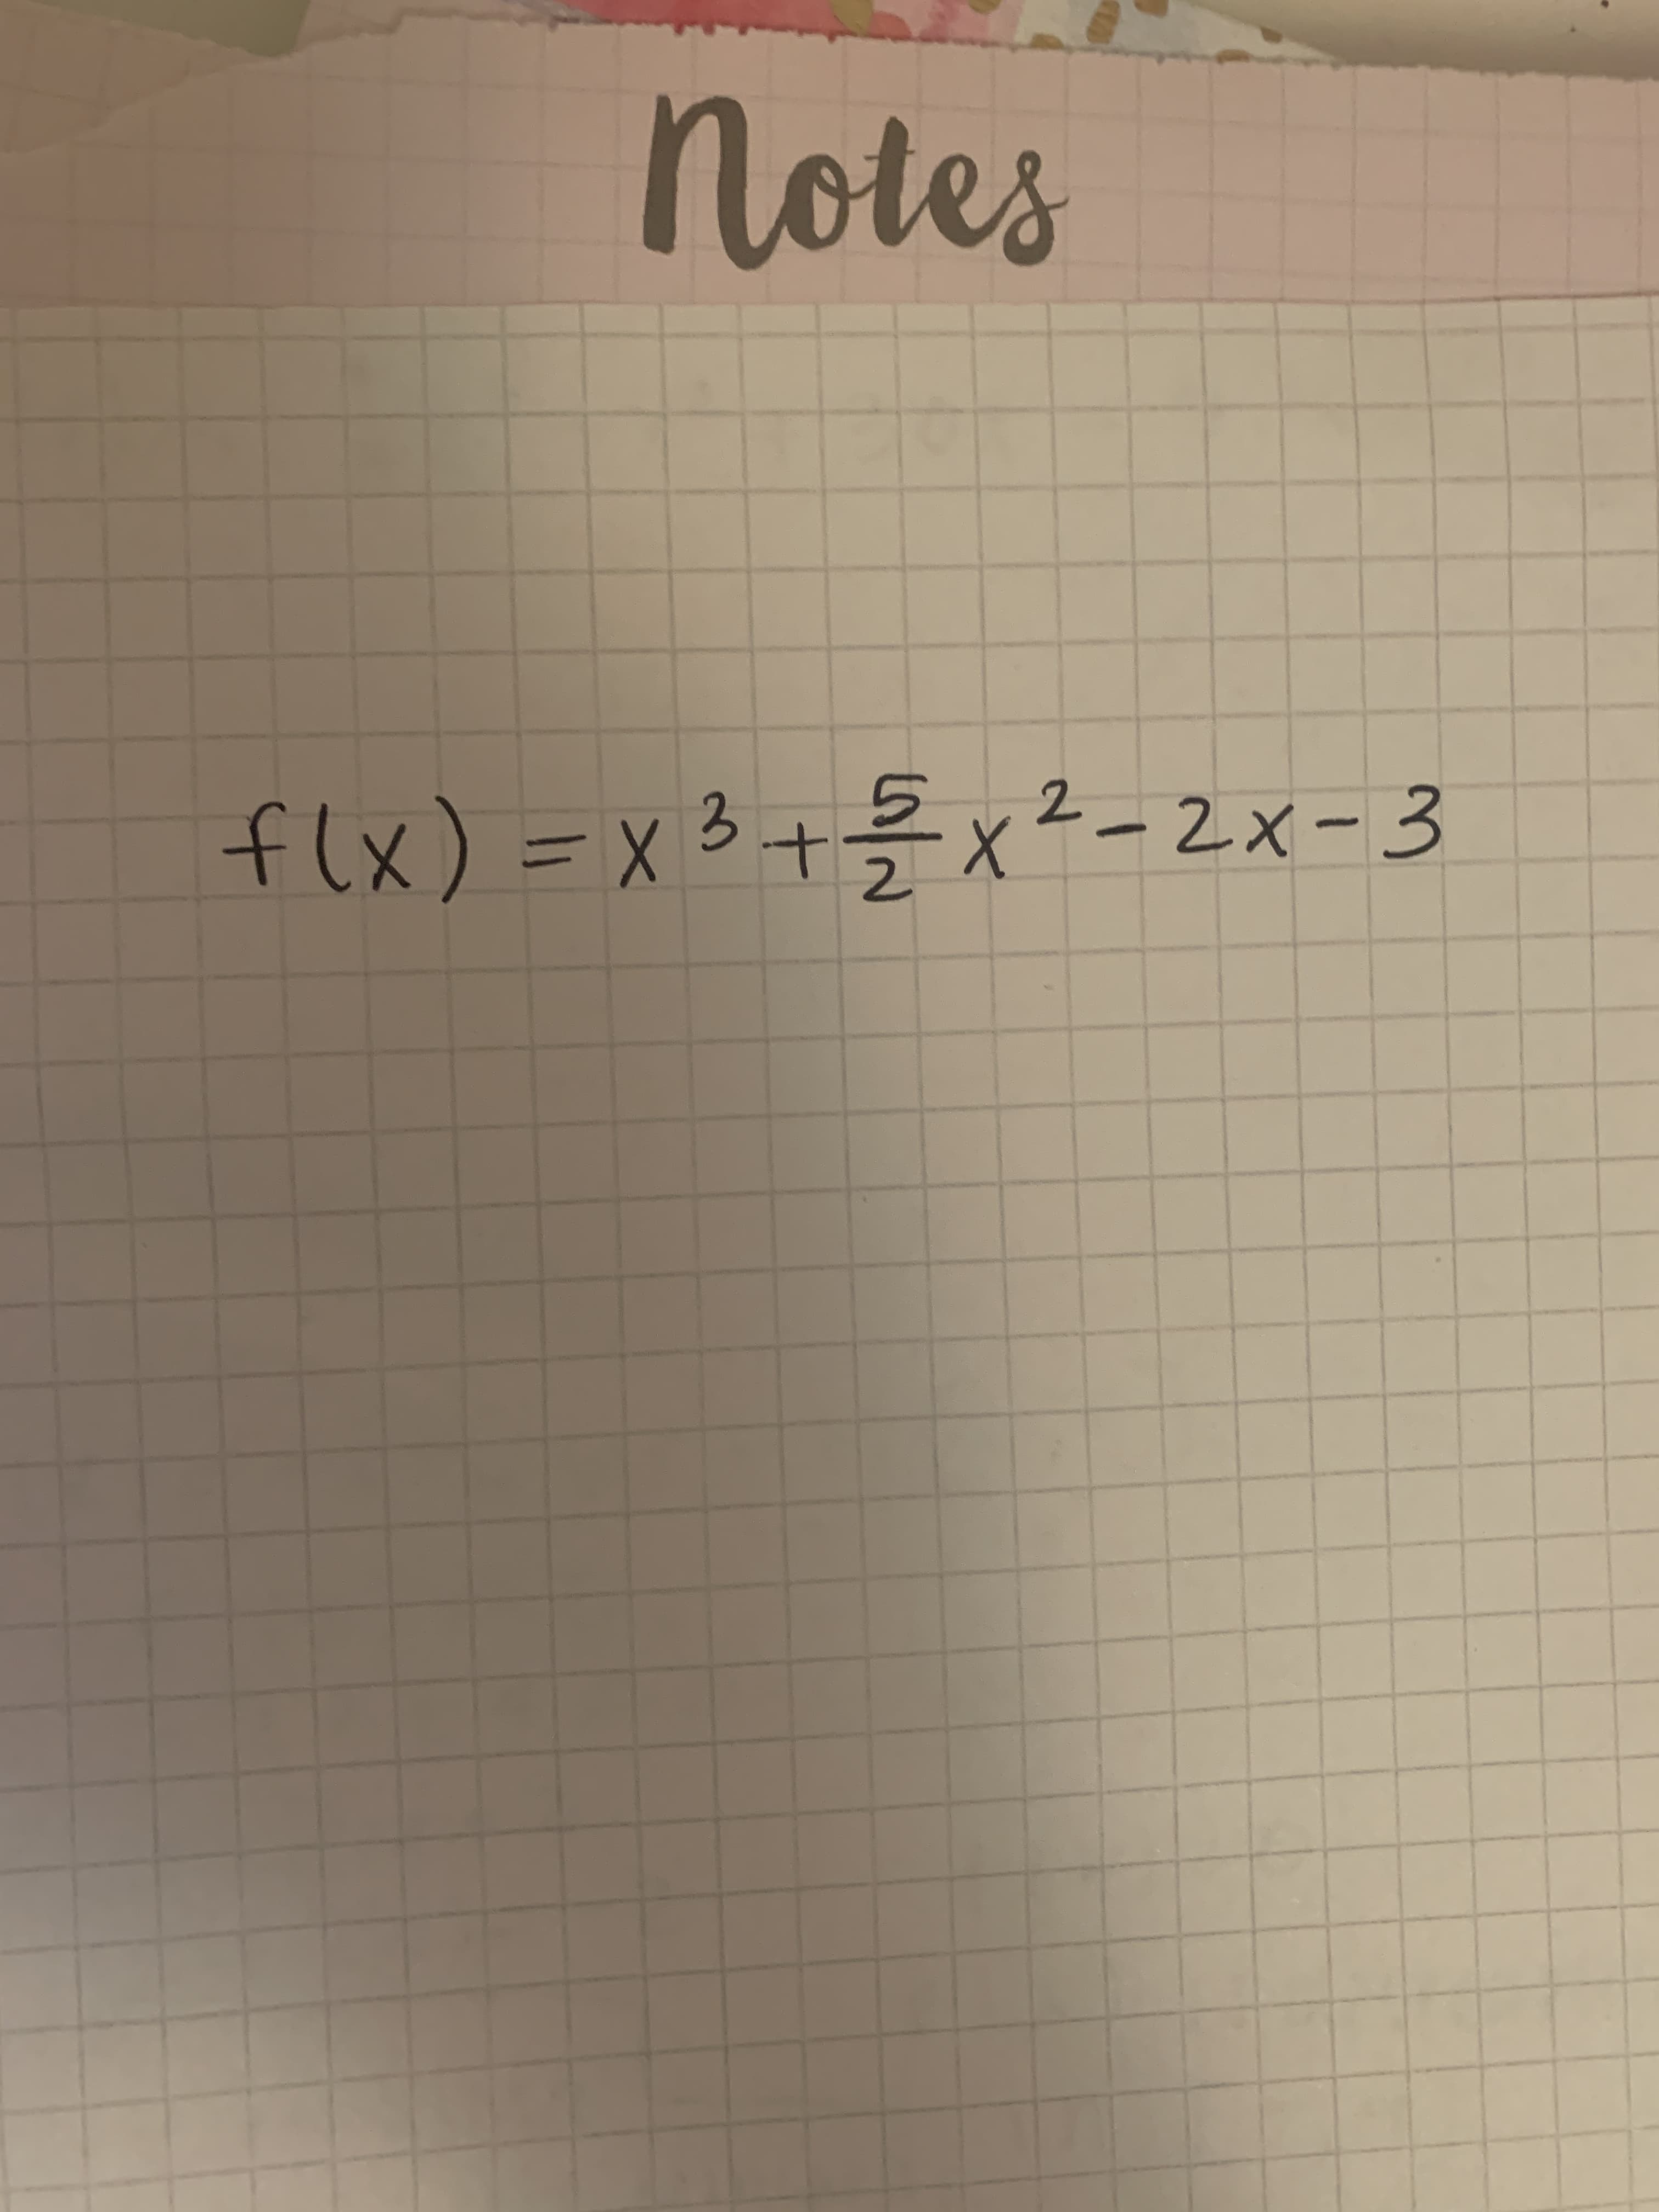 flx)=x3+号x2-2x-3
